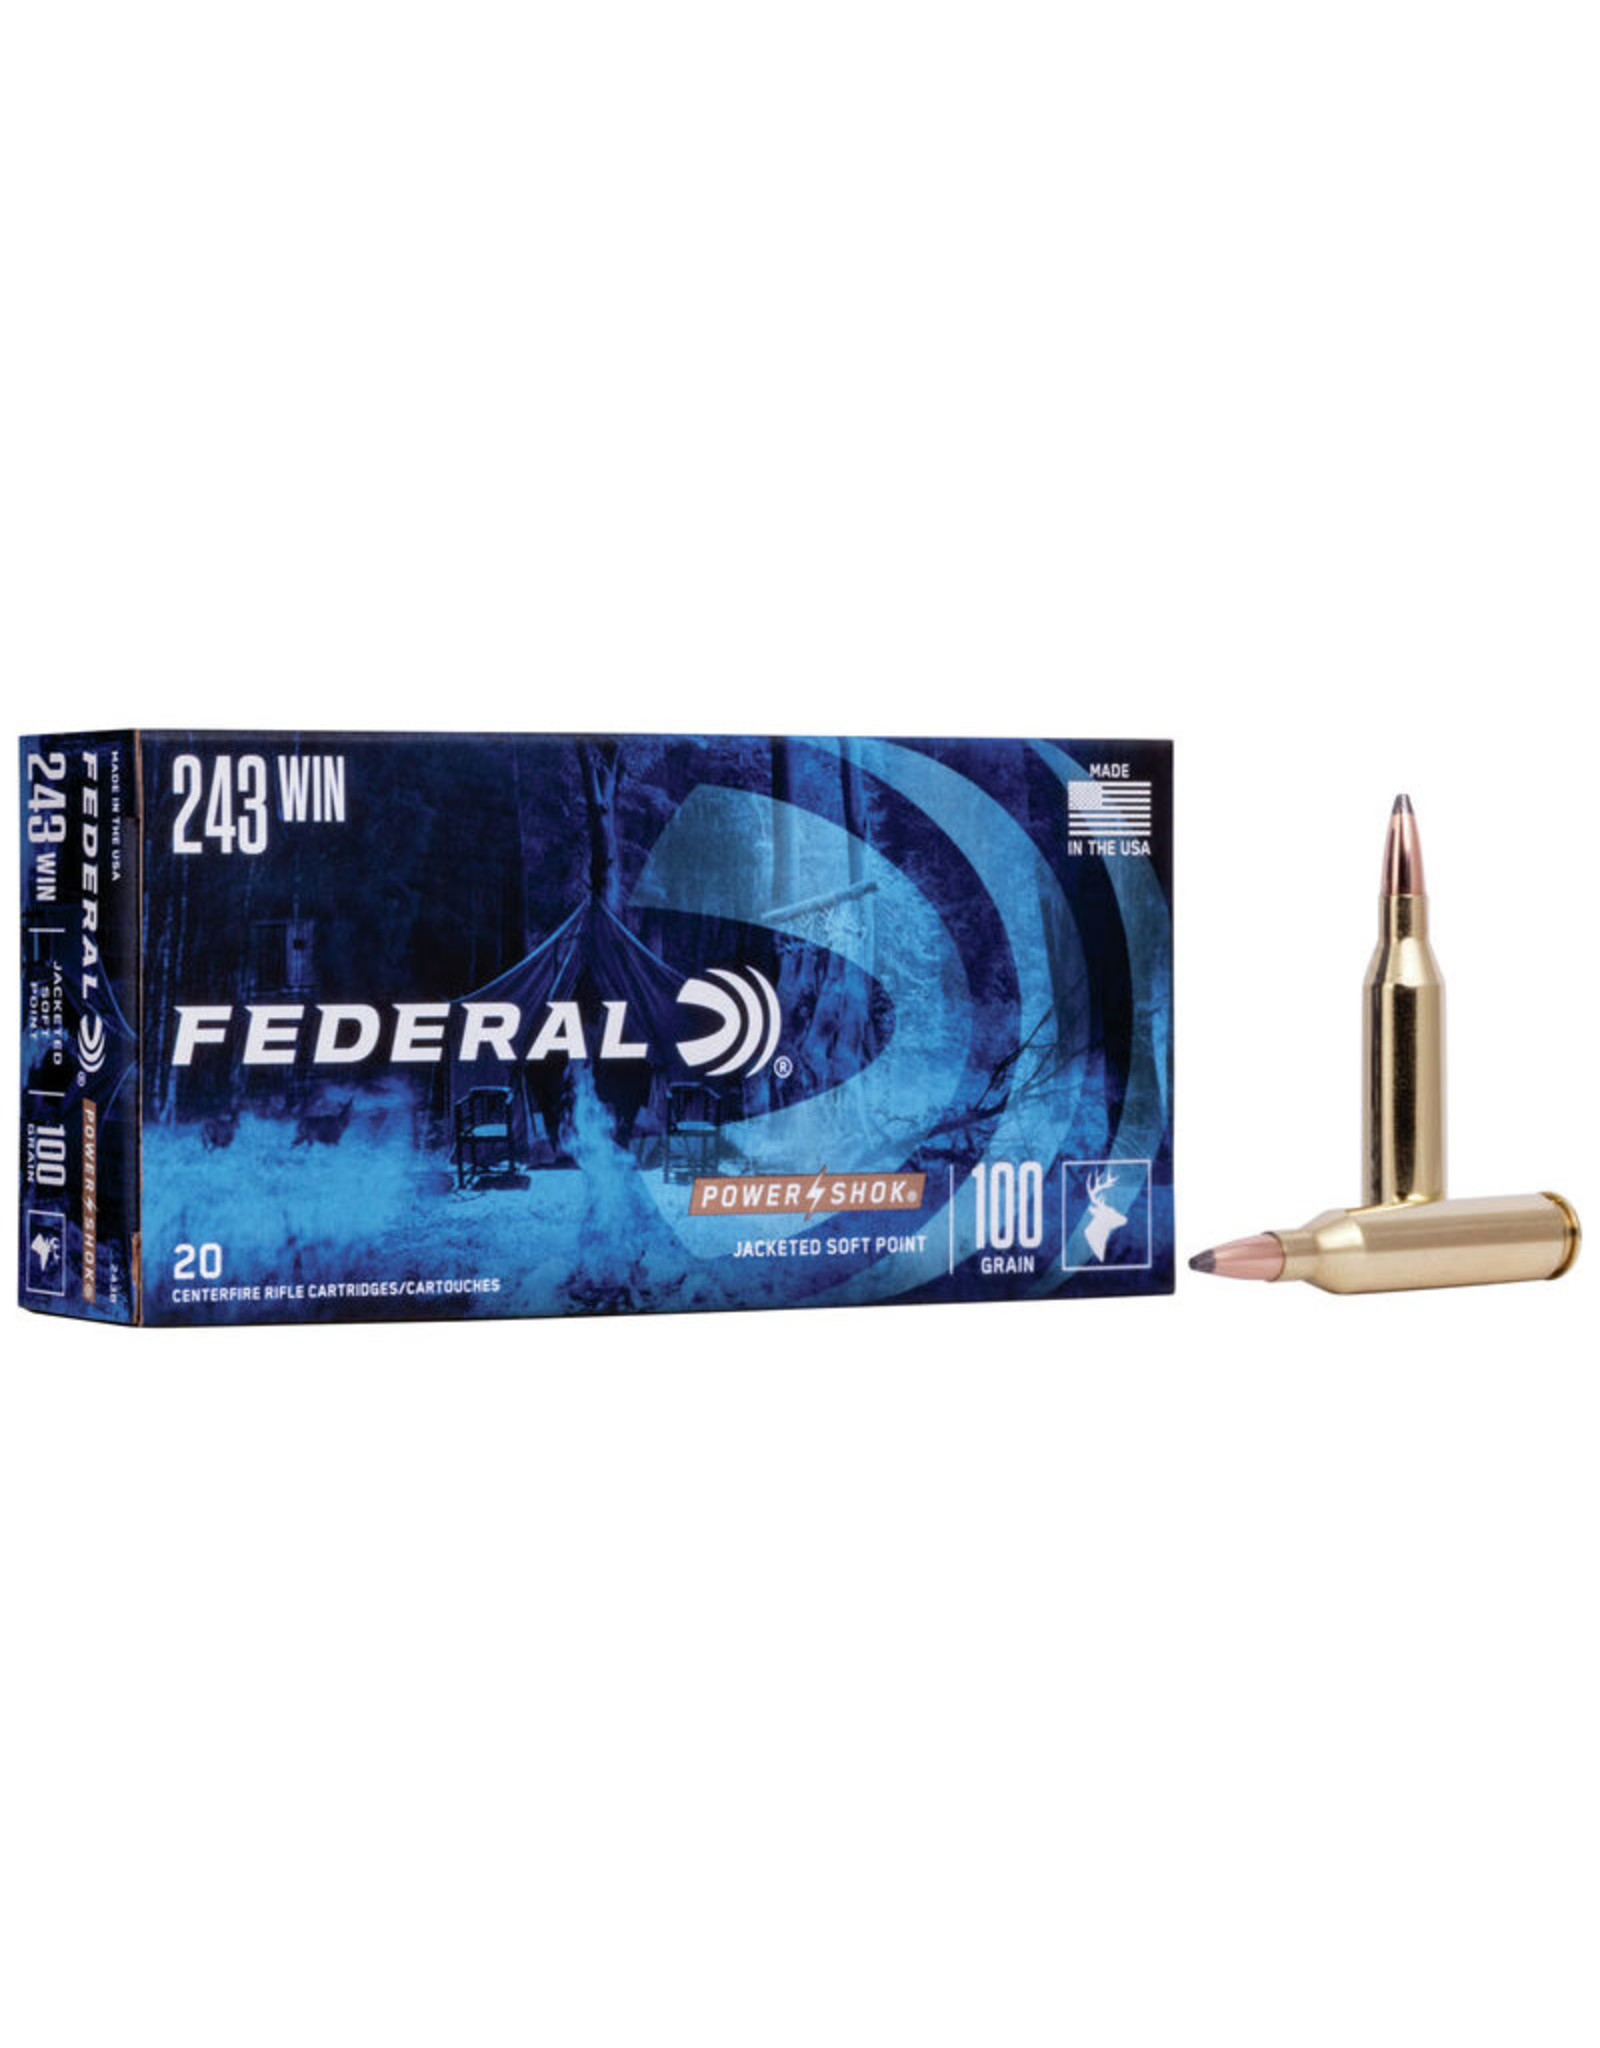 Federal Federal 243B Power-Shok Rifle Ammo 243 WIN, SP, 100 Grains, 2960 fps, 20, Boxed